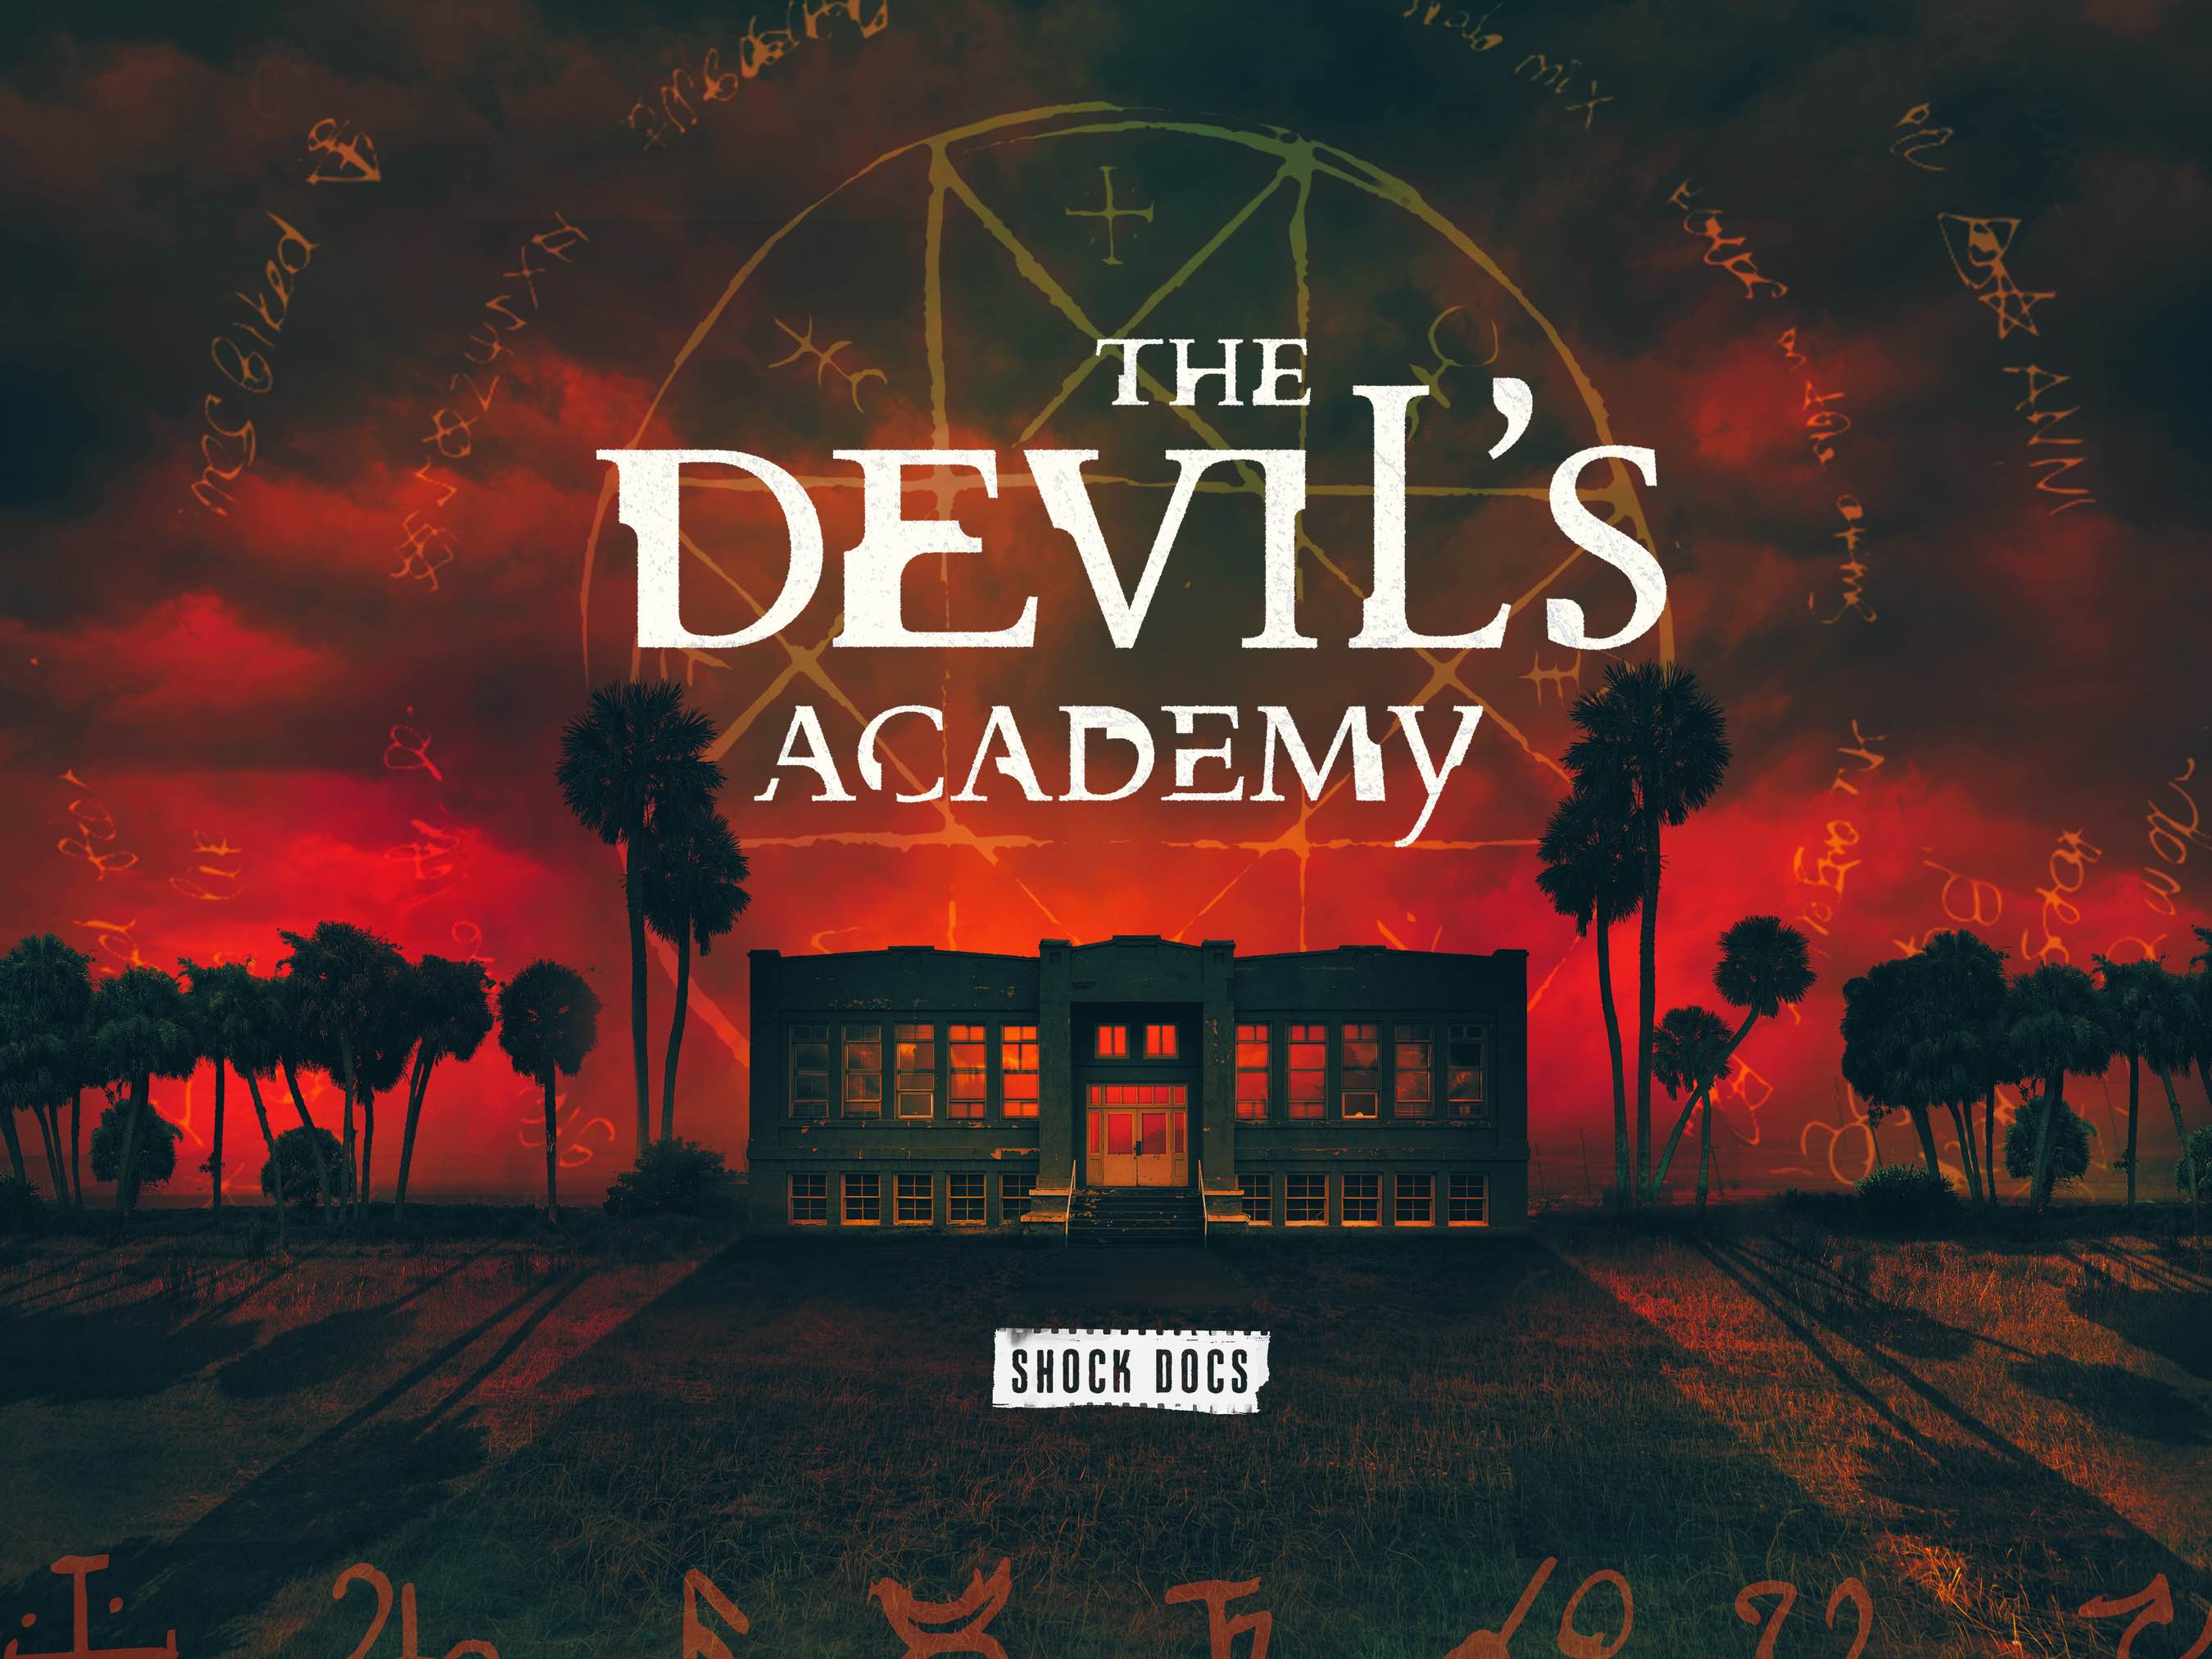 The Devil's Academy